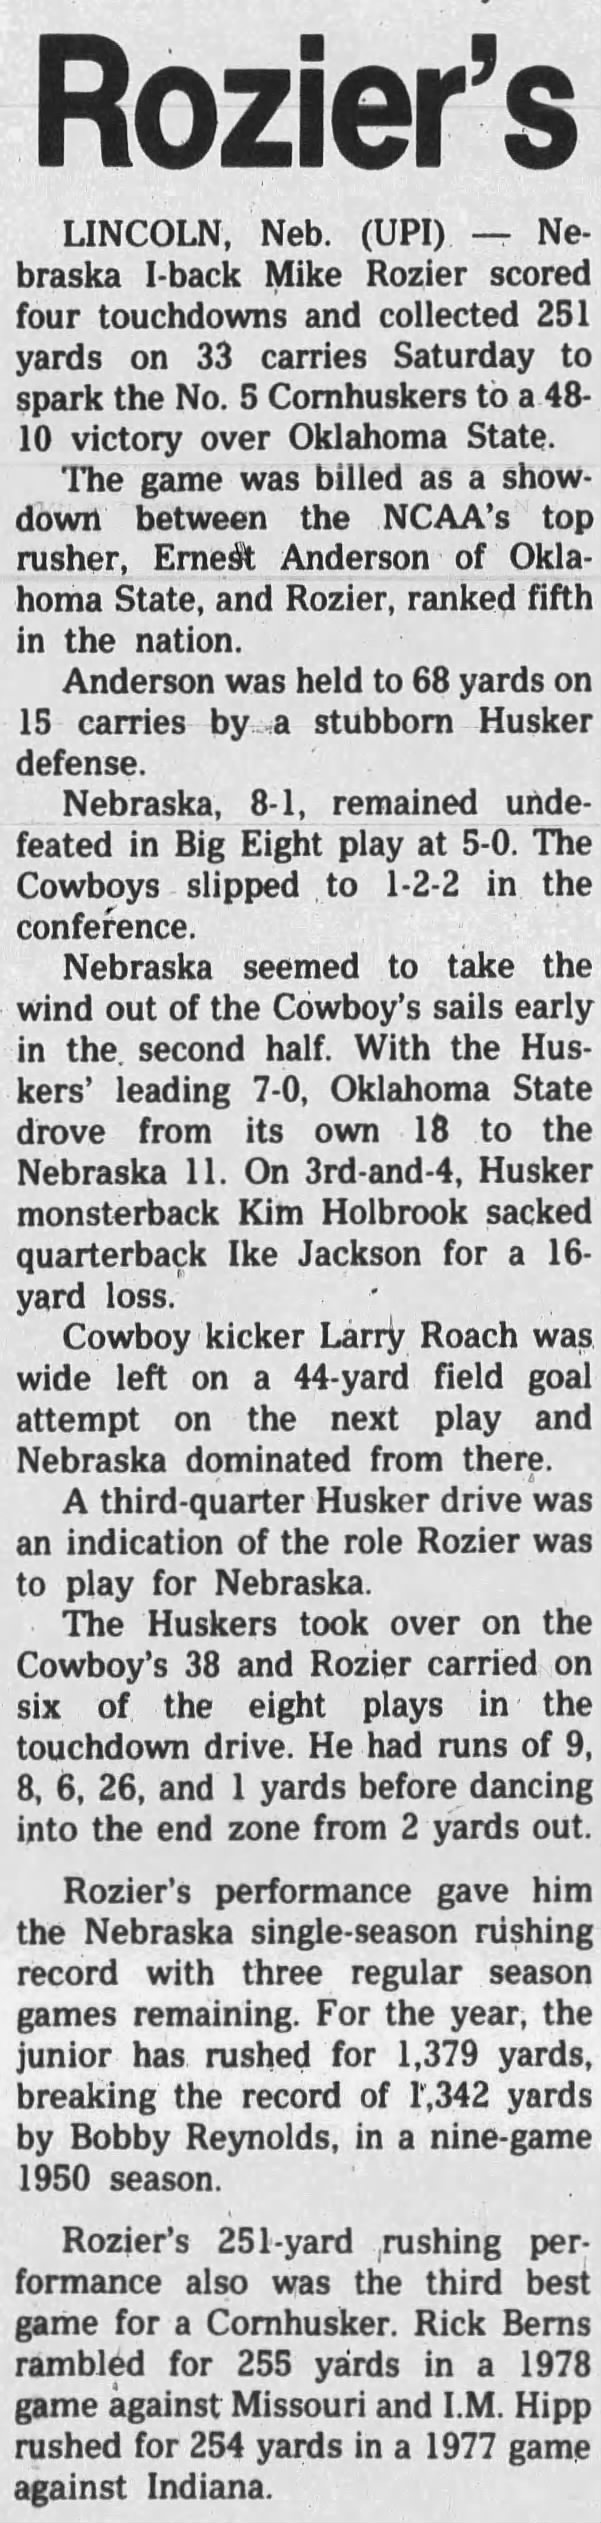 1982 Nebraska-Oklahoma State football, UPI